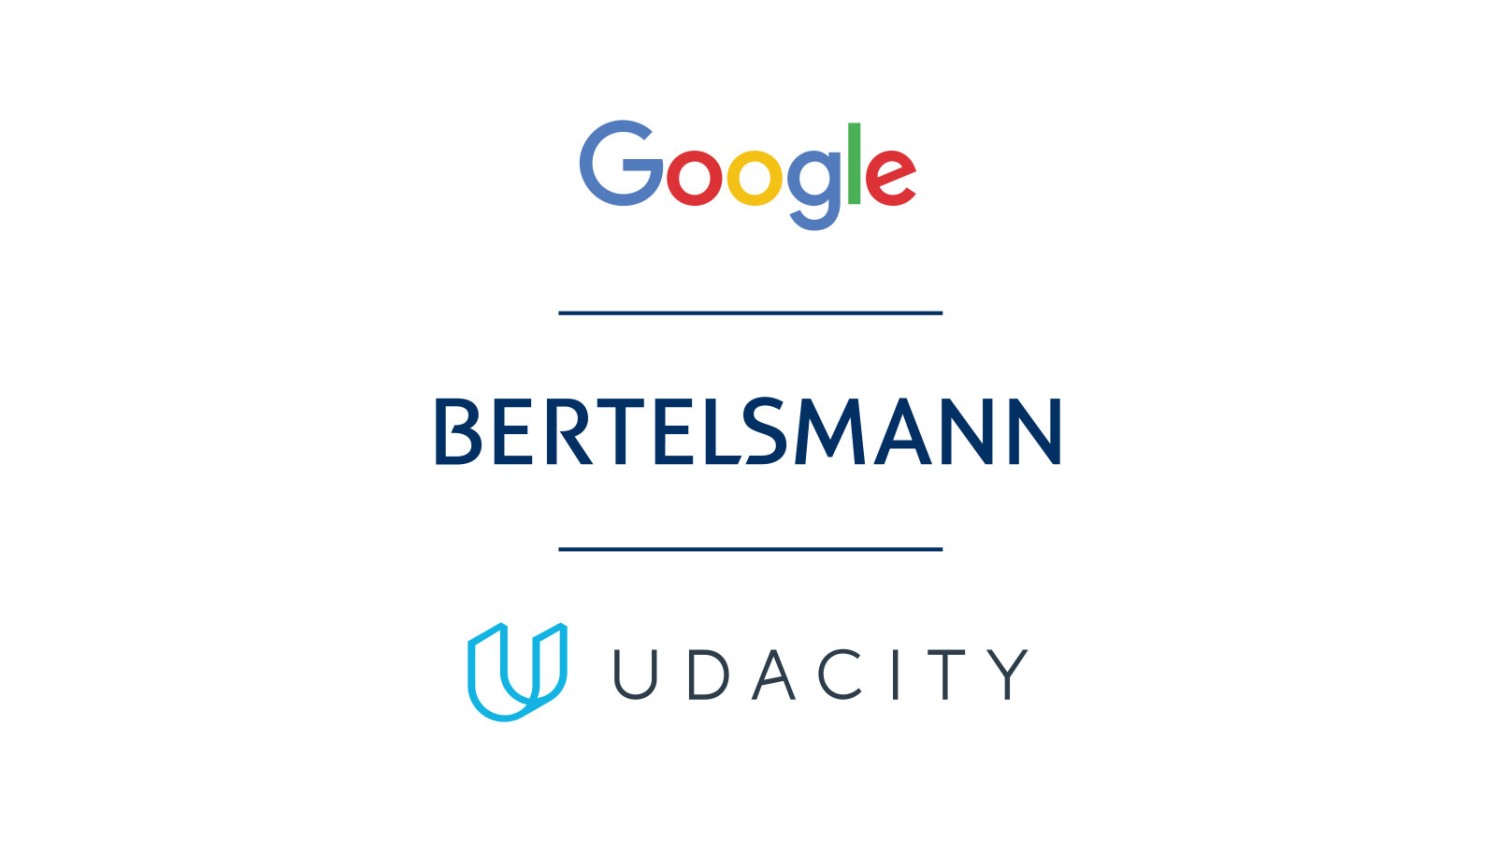 Google Udacity Scholarship